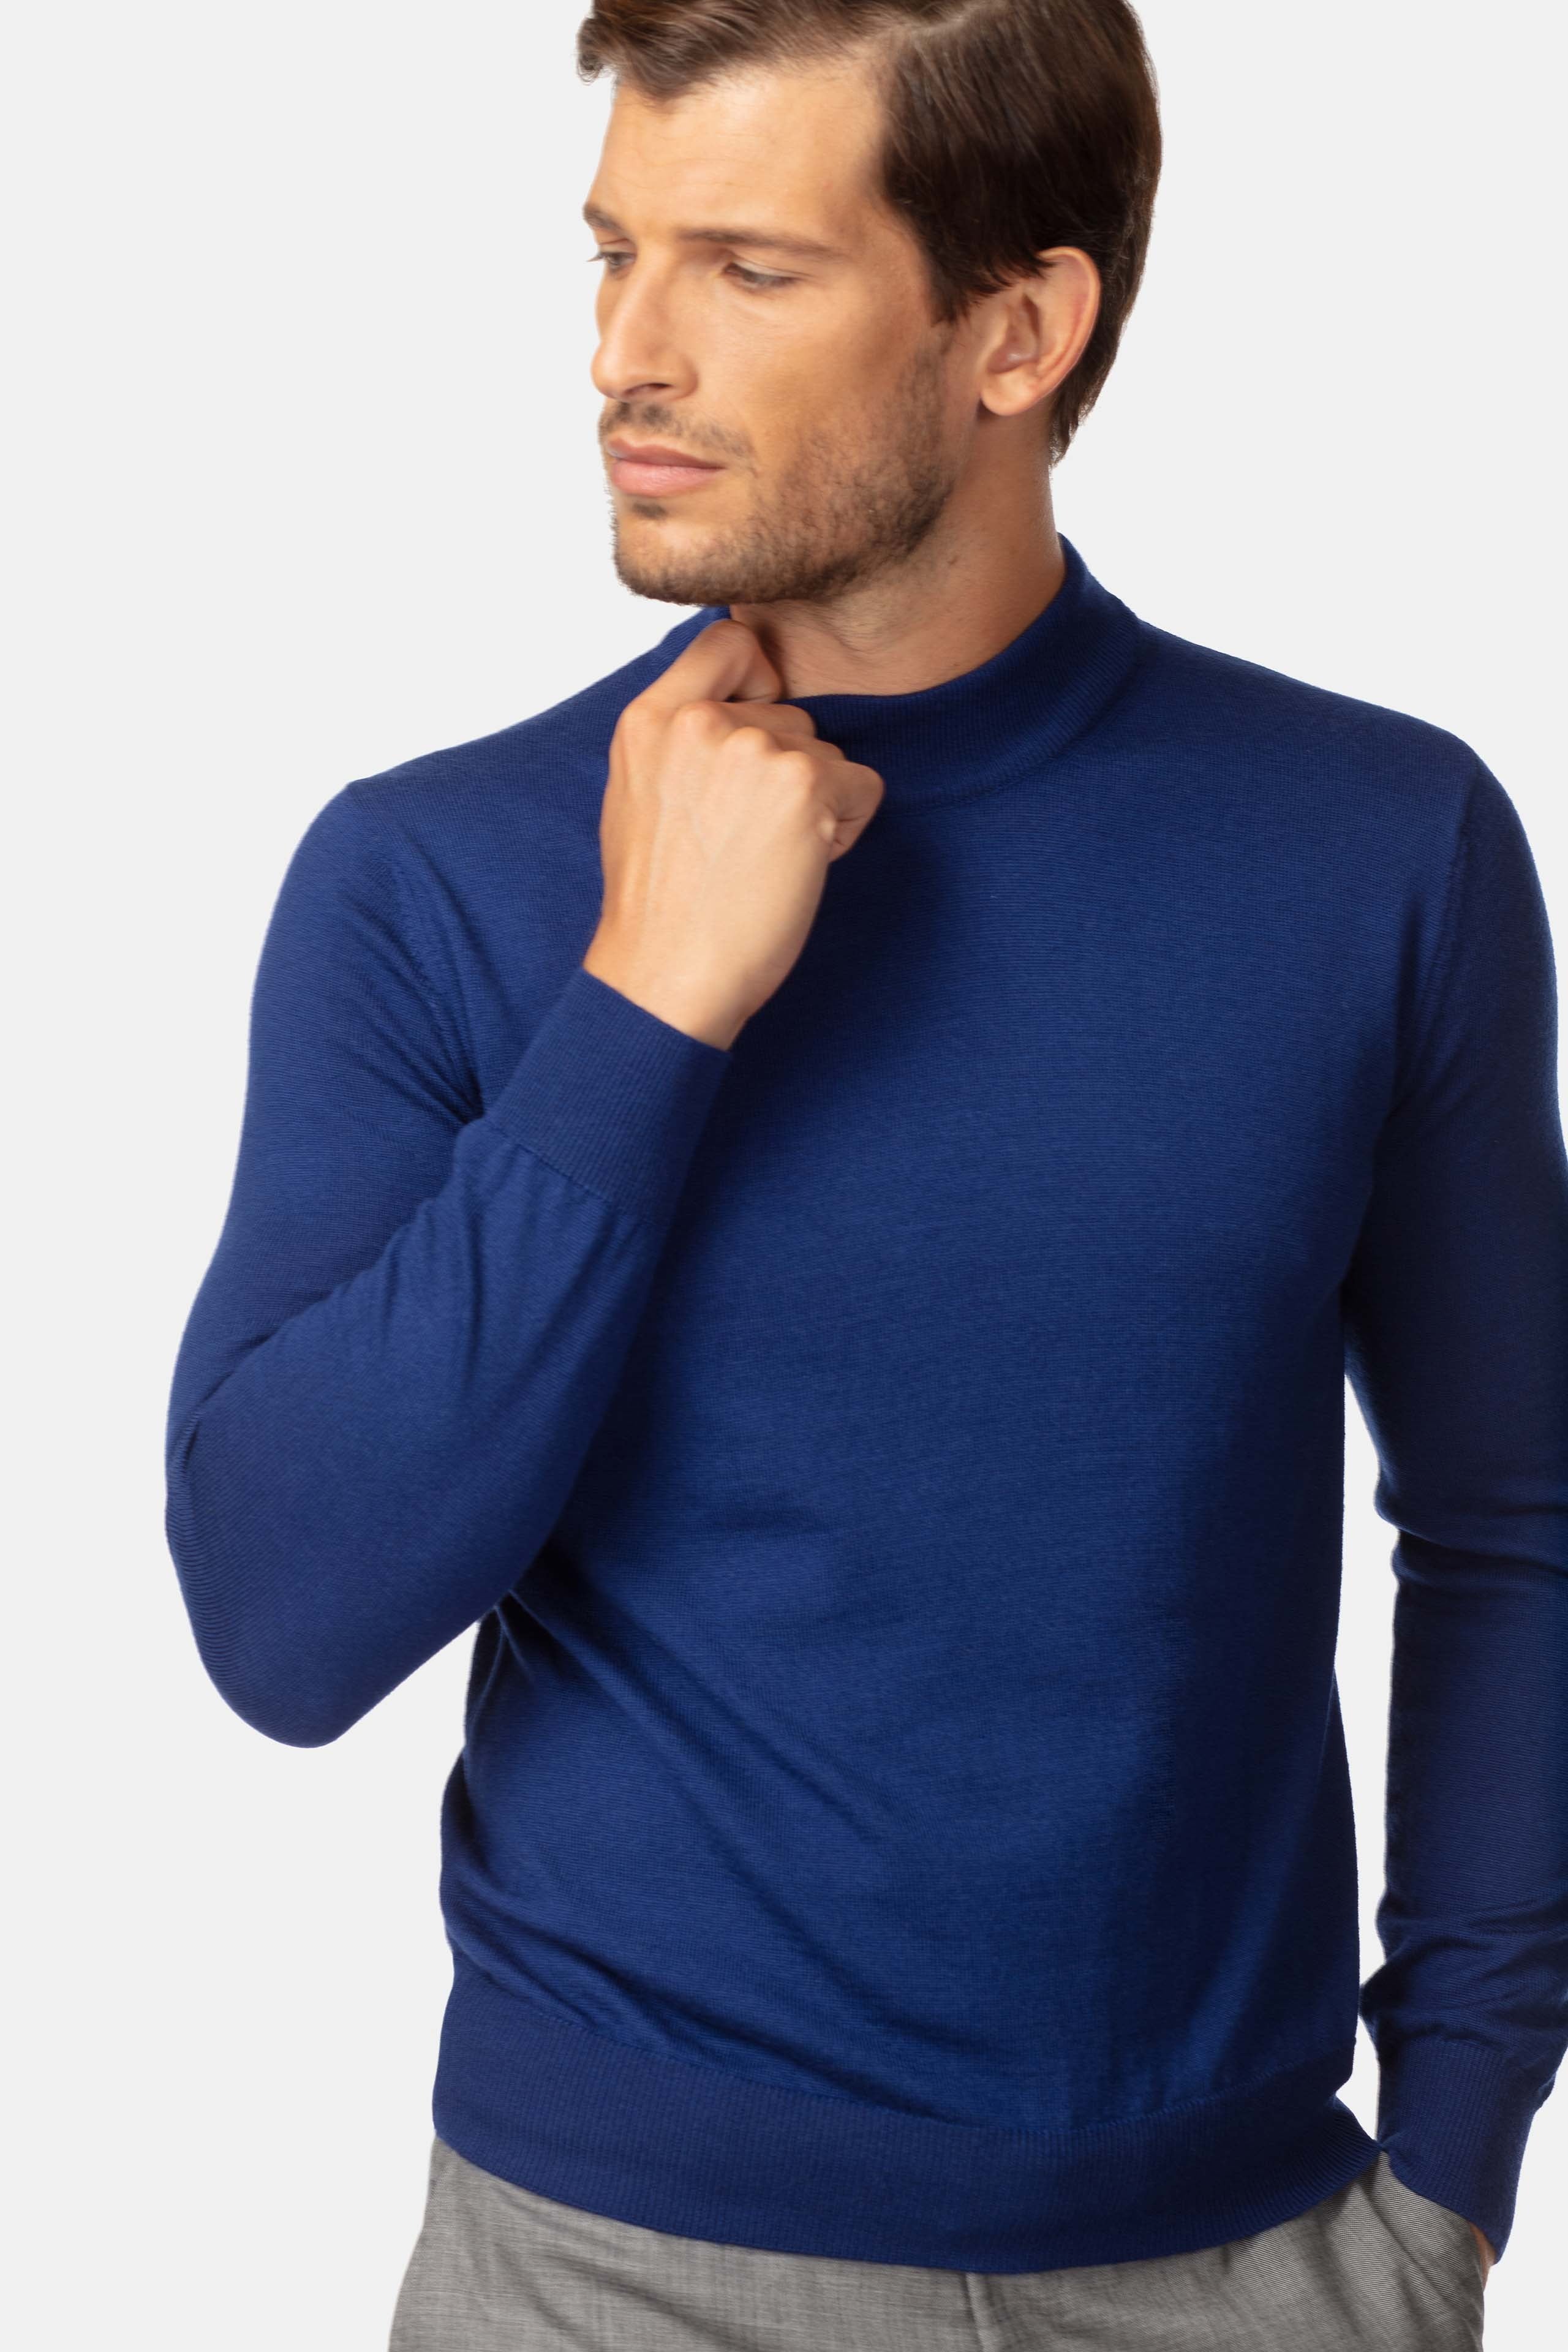 Wool mock turtleneck sweater - Medium blue